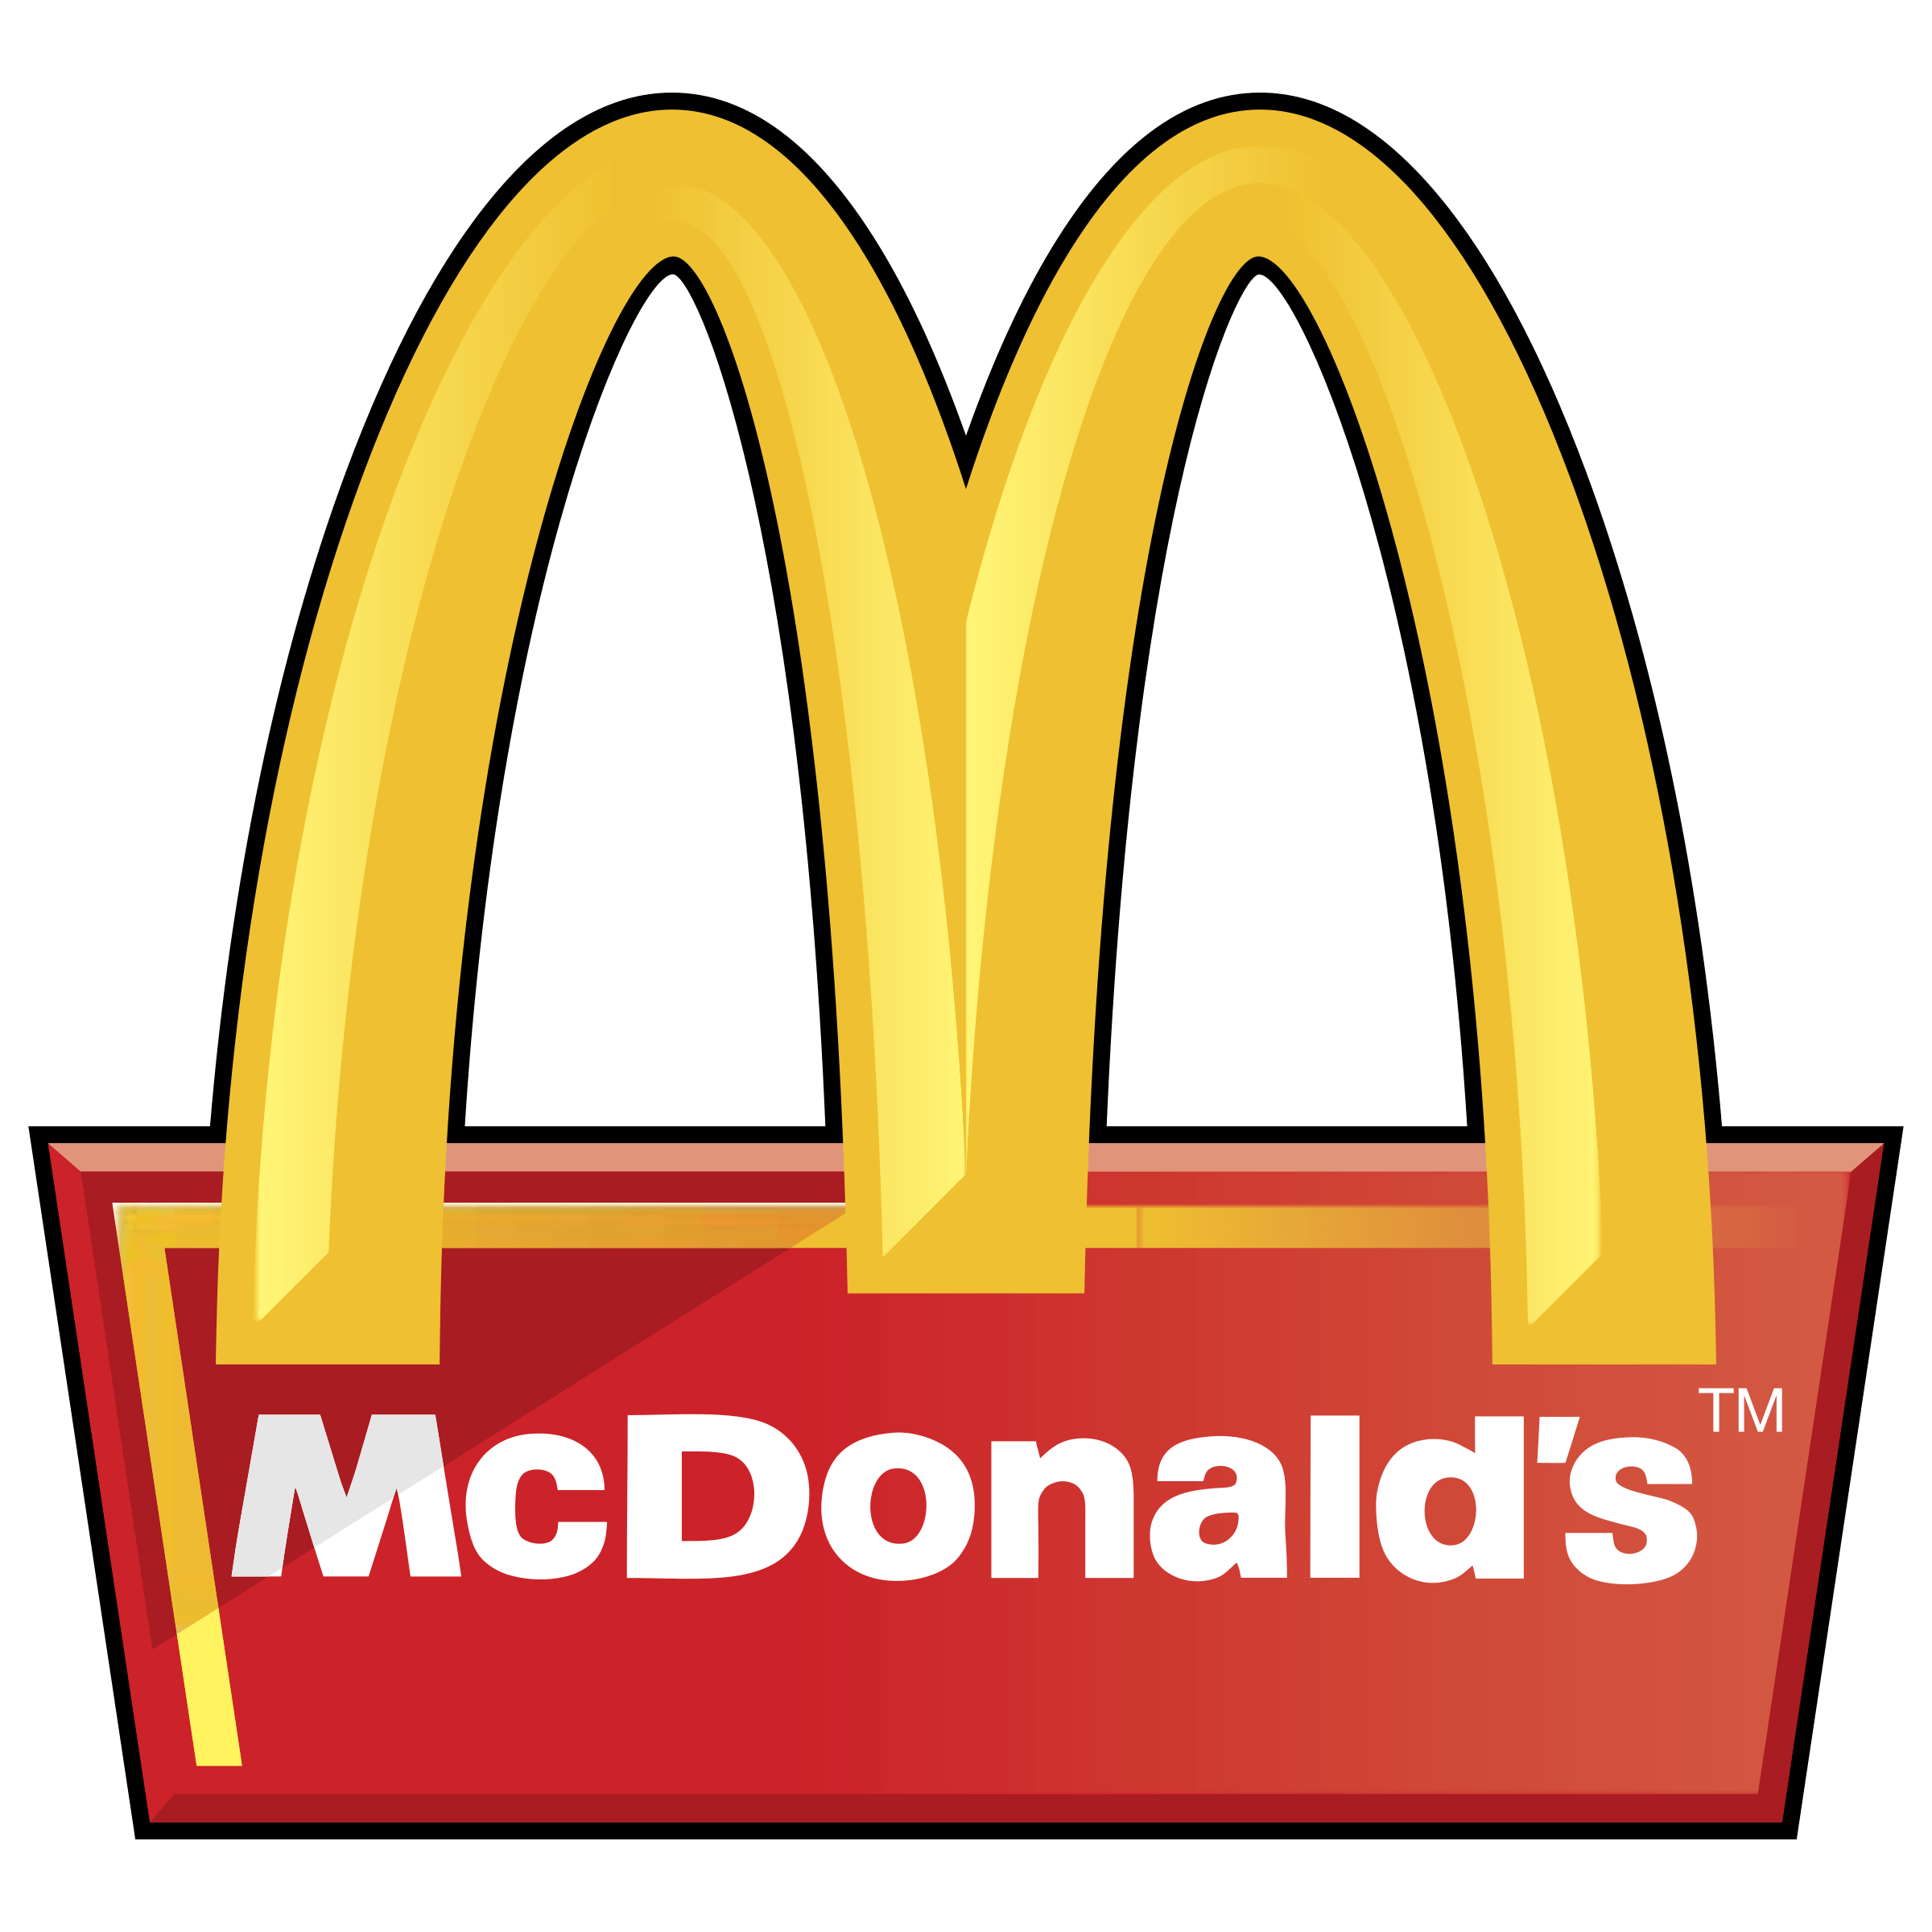 McDonald Logo - McDonald's Logo PNG Transparent & SVG Vector - Freebie Supply